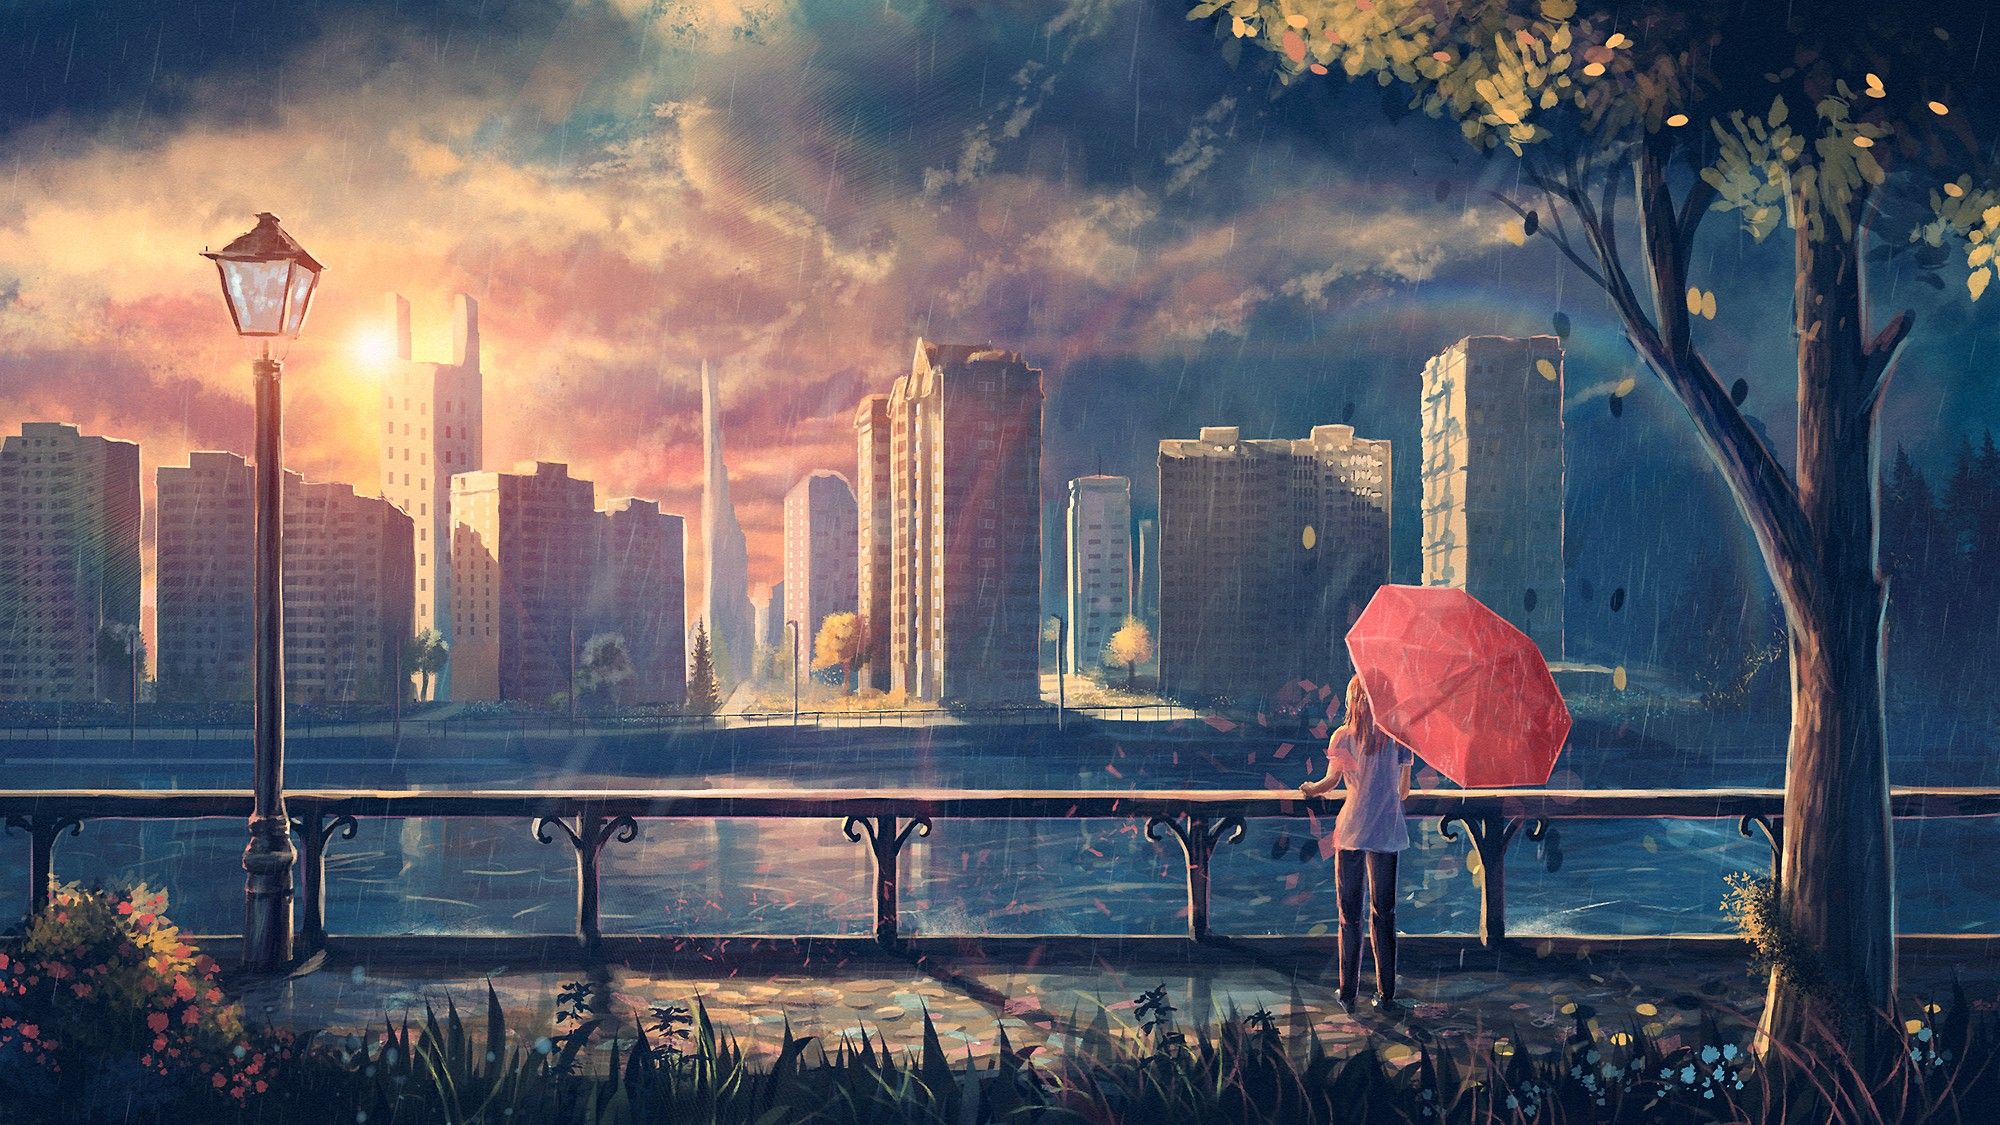 Wallpaper Anime Girl With Umbrella Anime Cartoon Umbrella Atmosphere  Background  Download Free Image